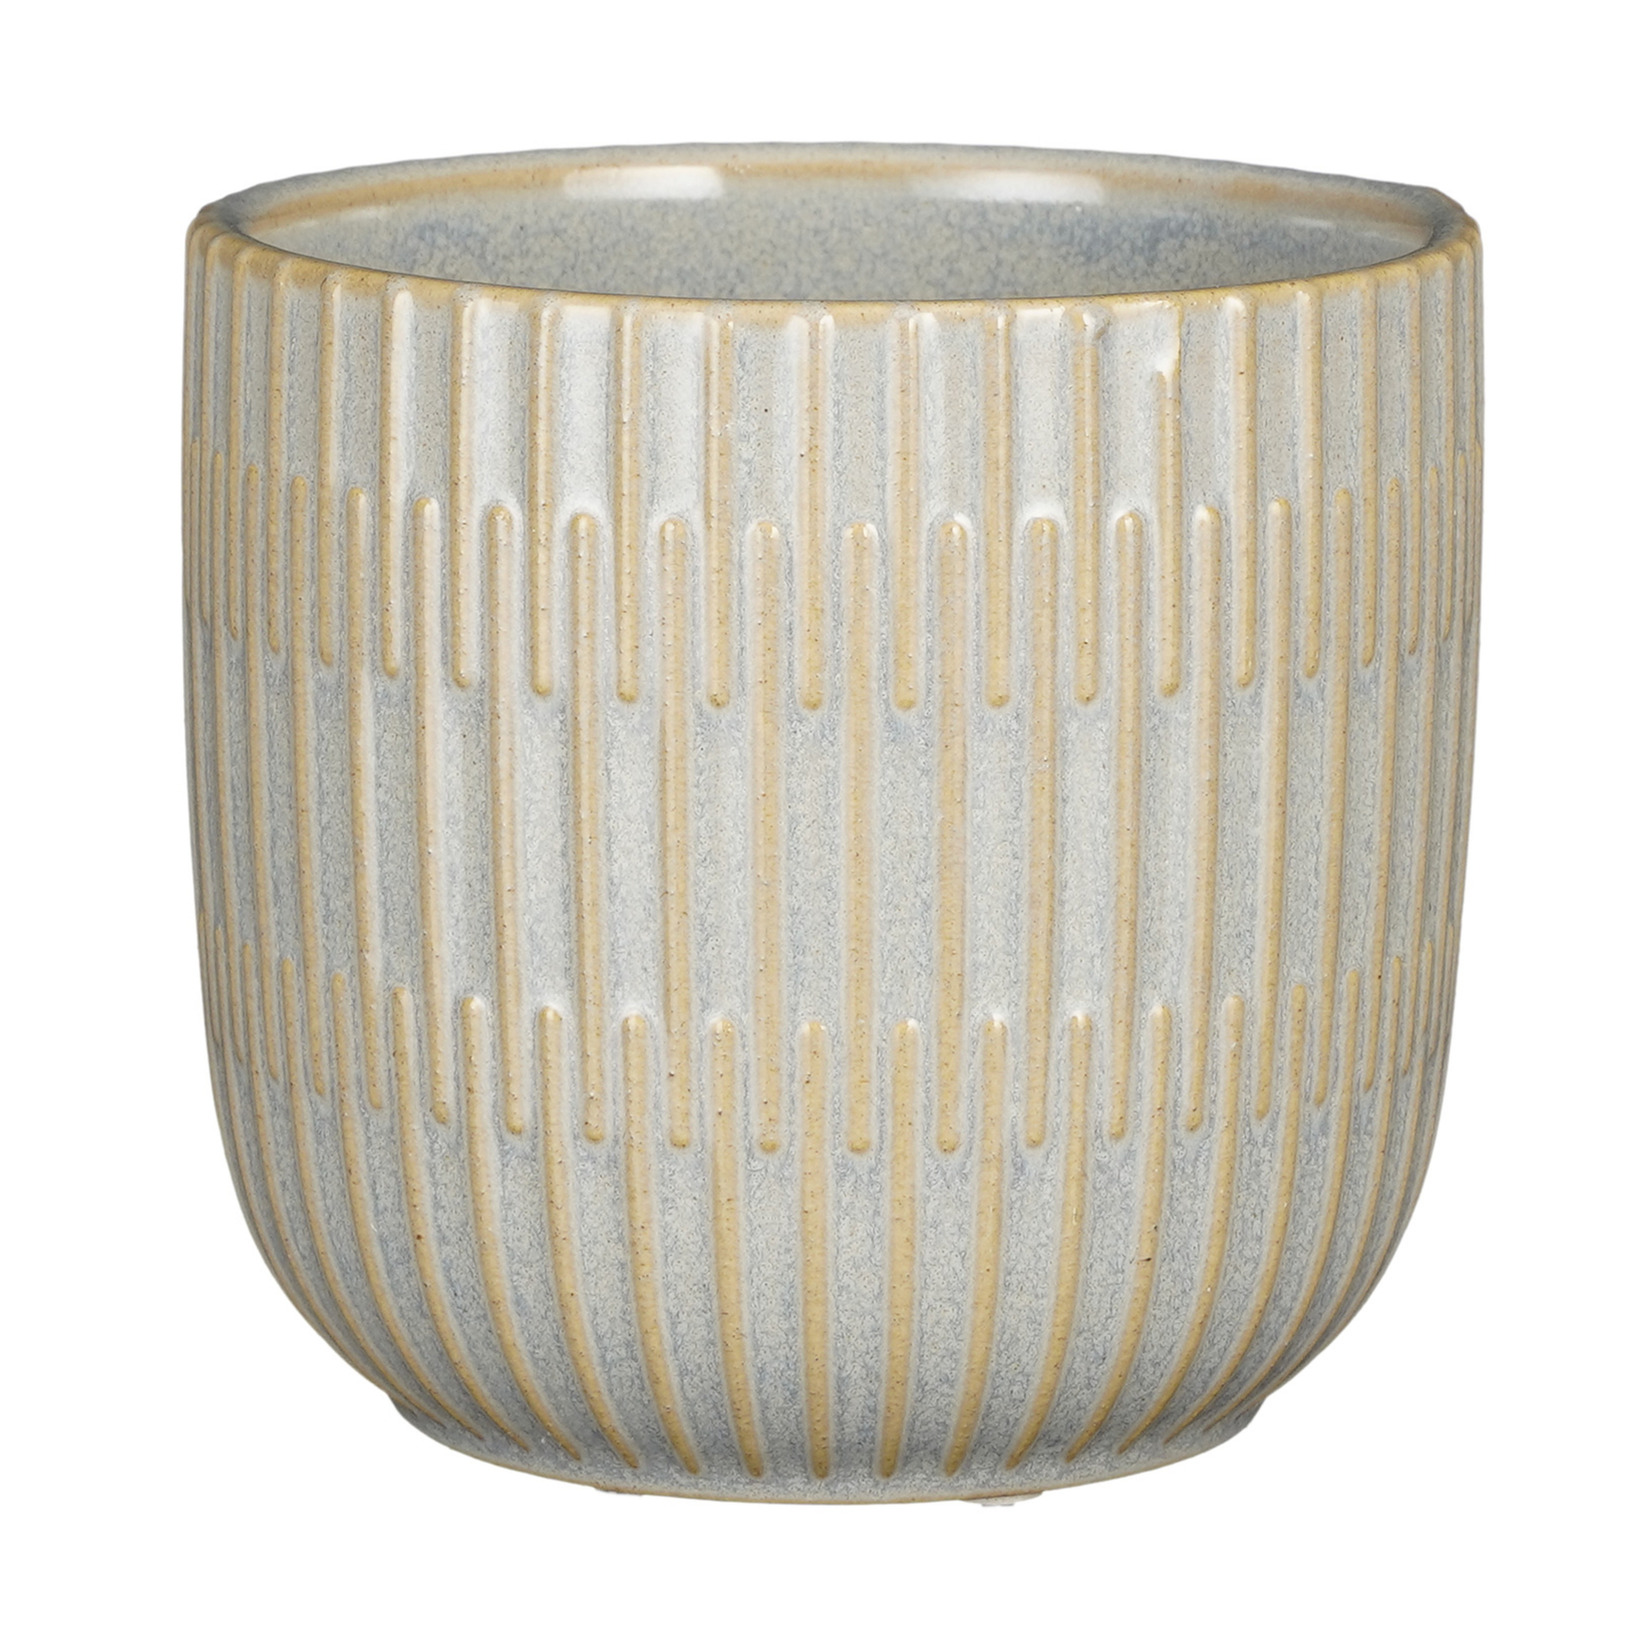 Mica Decorations Plantenpot/bloempot keramiek lichtgrijs stripes patroon - D14/H13 cm -